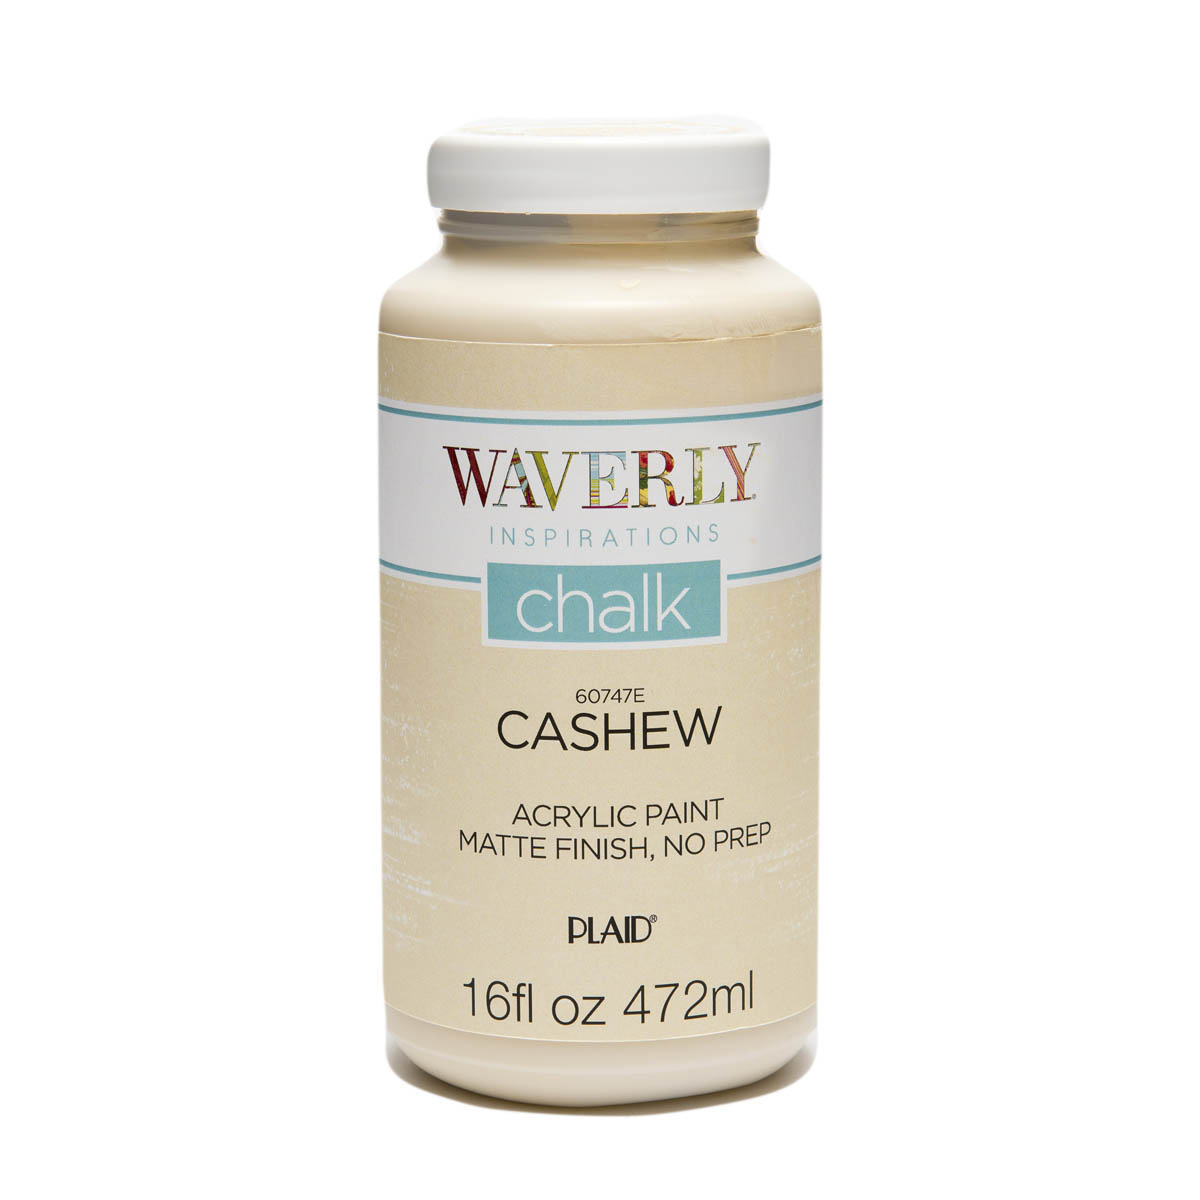 Waverly ® Inspirations Chalk Finish Acrylic Paint - Cashew, 16 oz. - 60747E